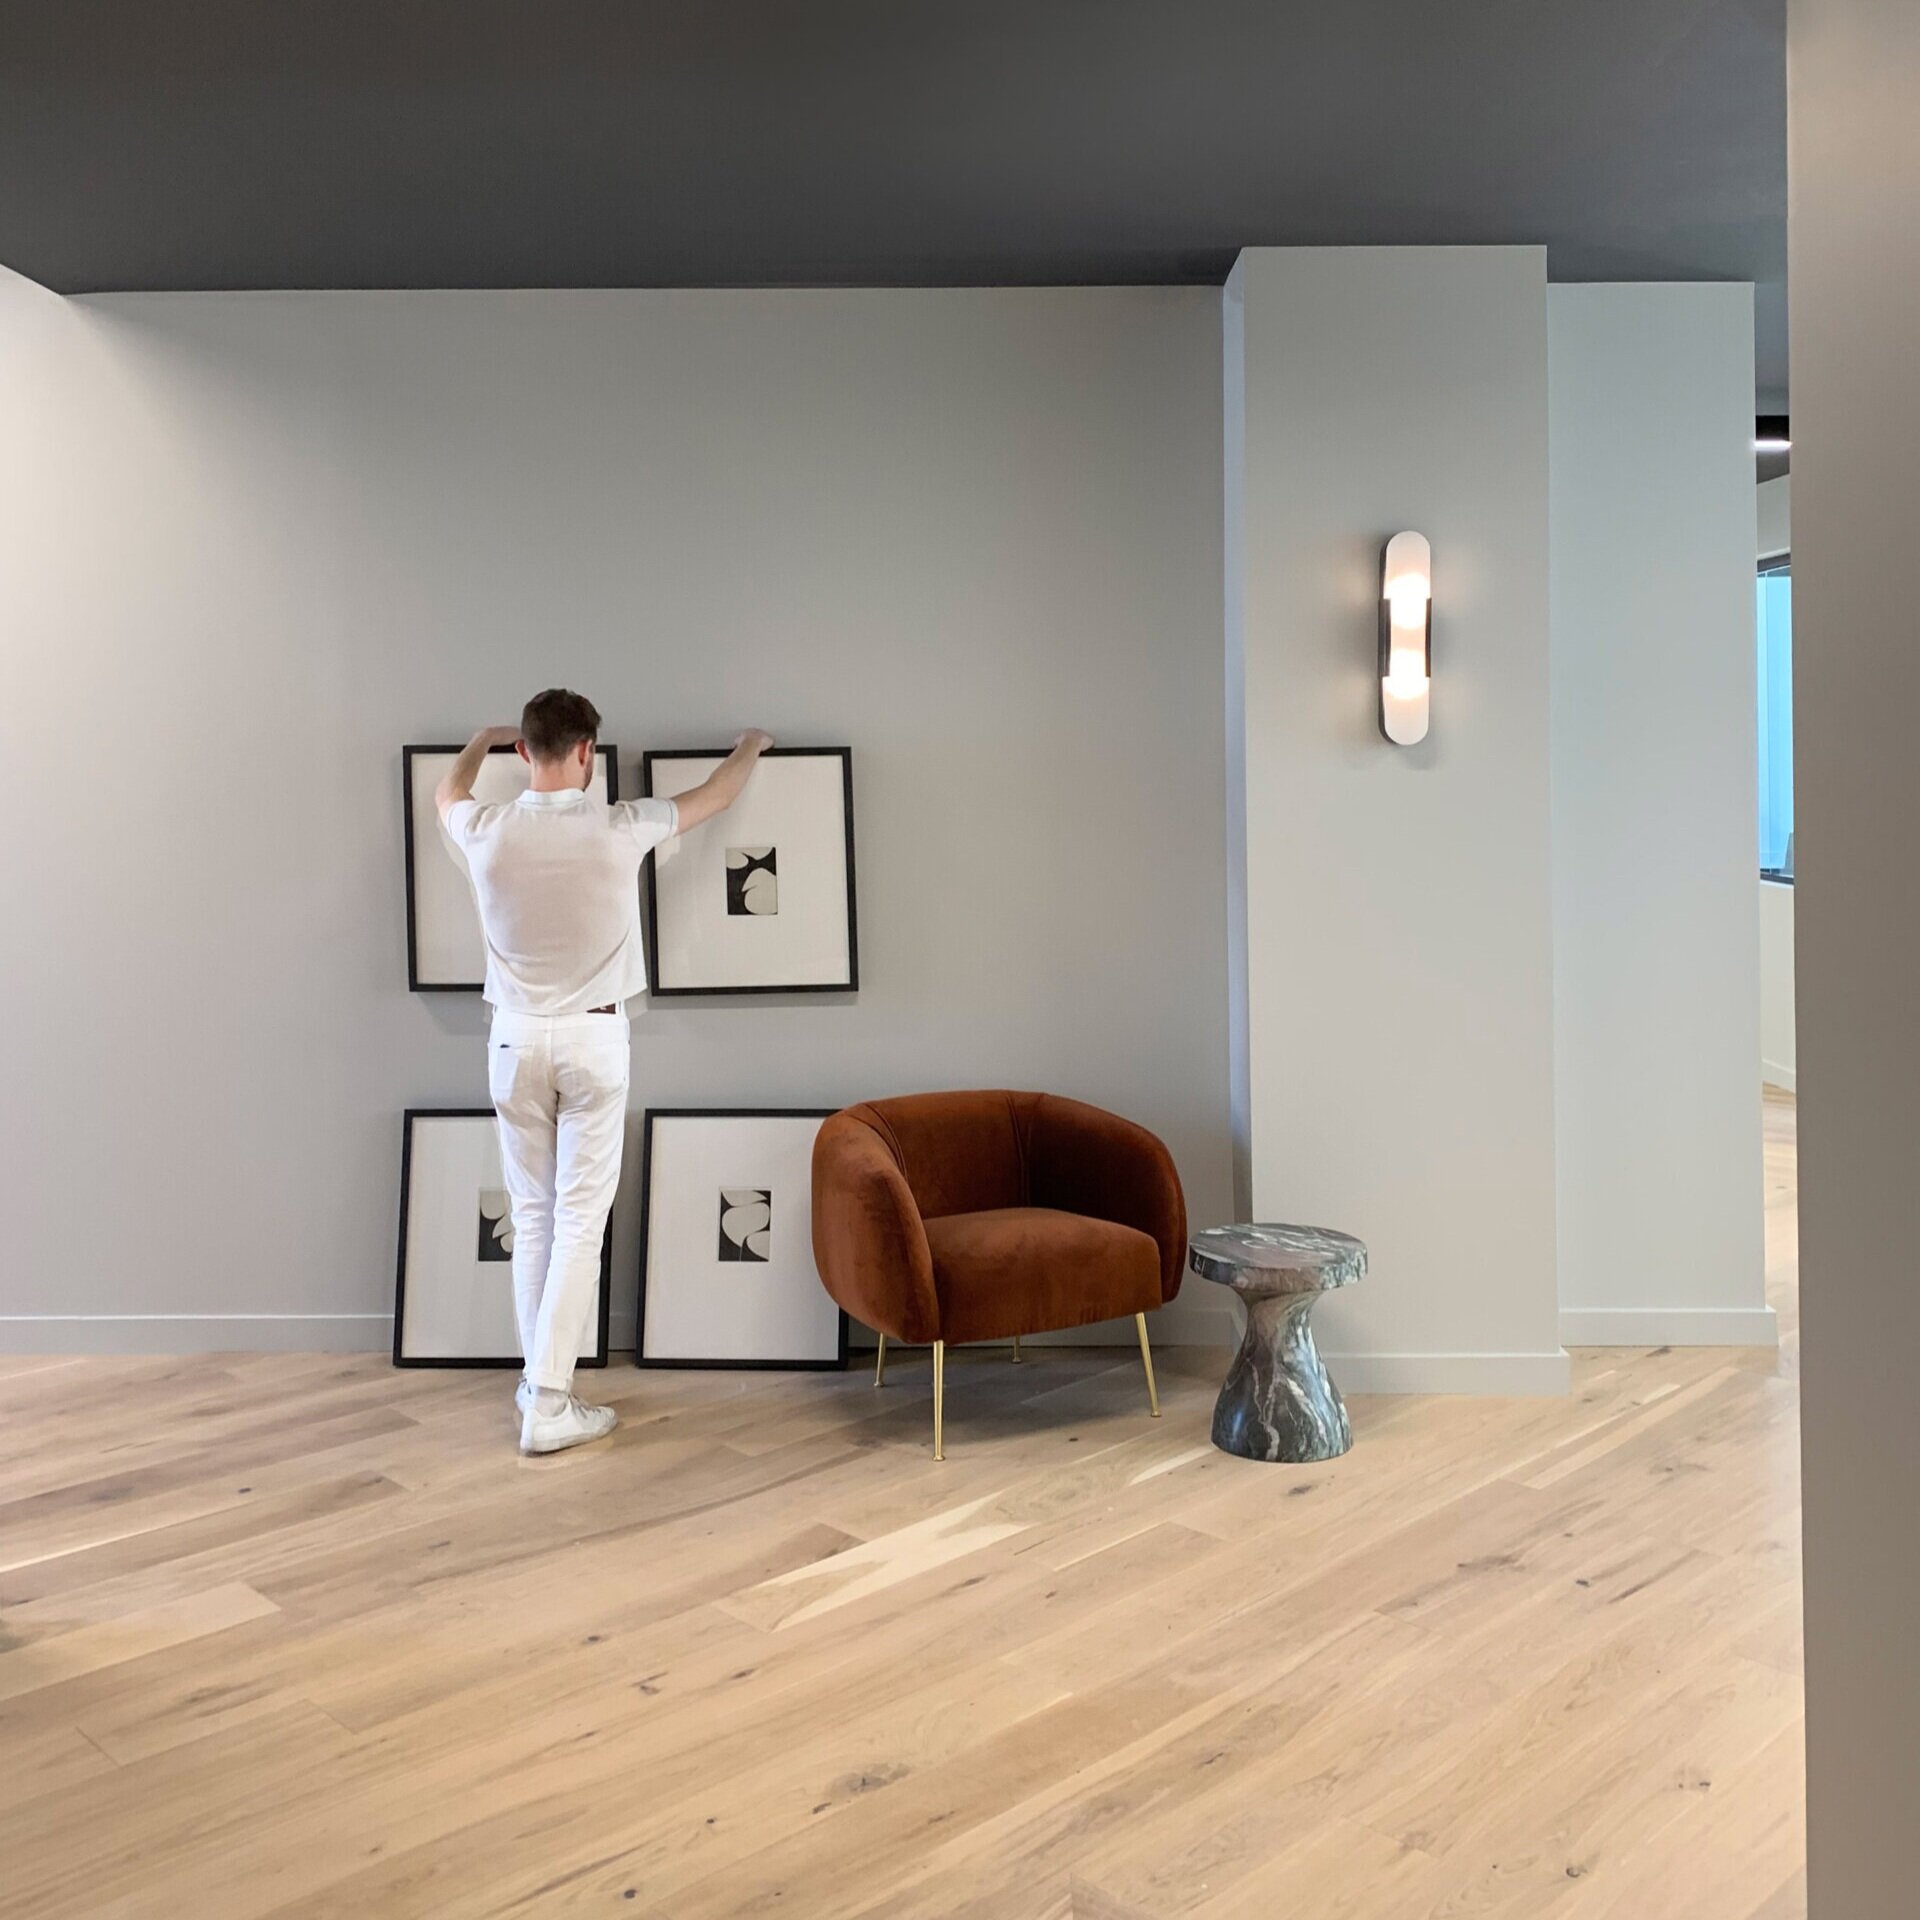 5 Zen Office Decor Ideas to Make a Calming Workspace